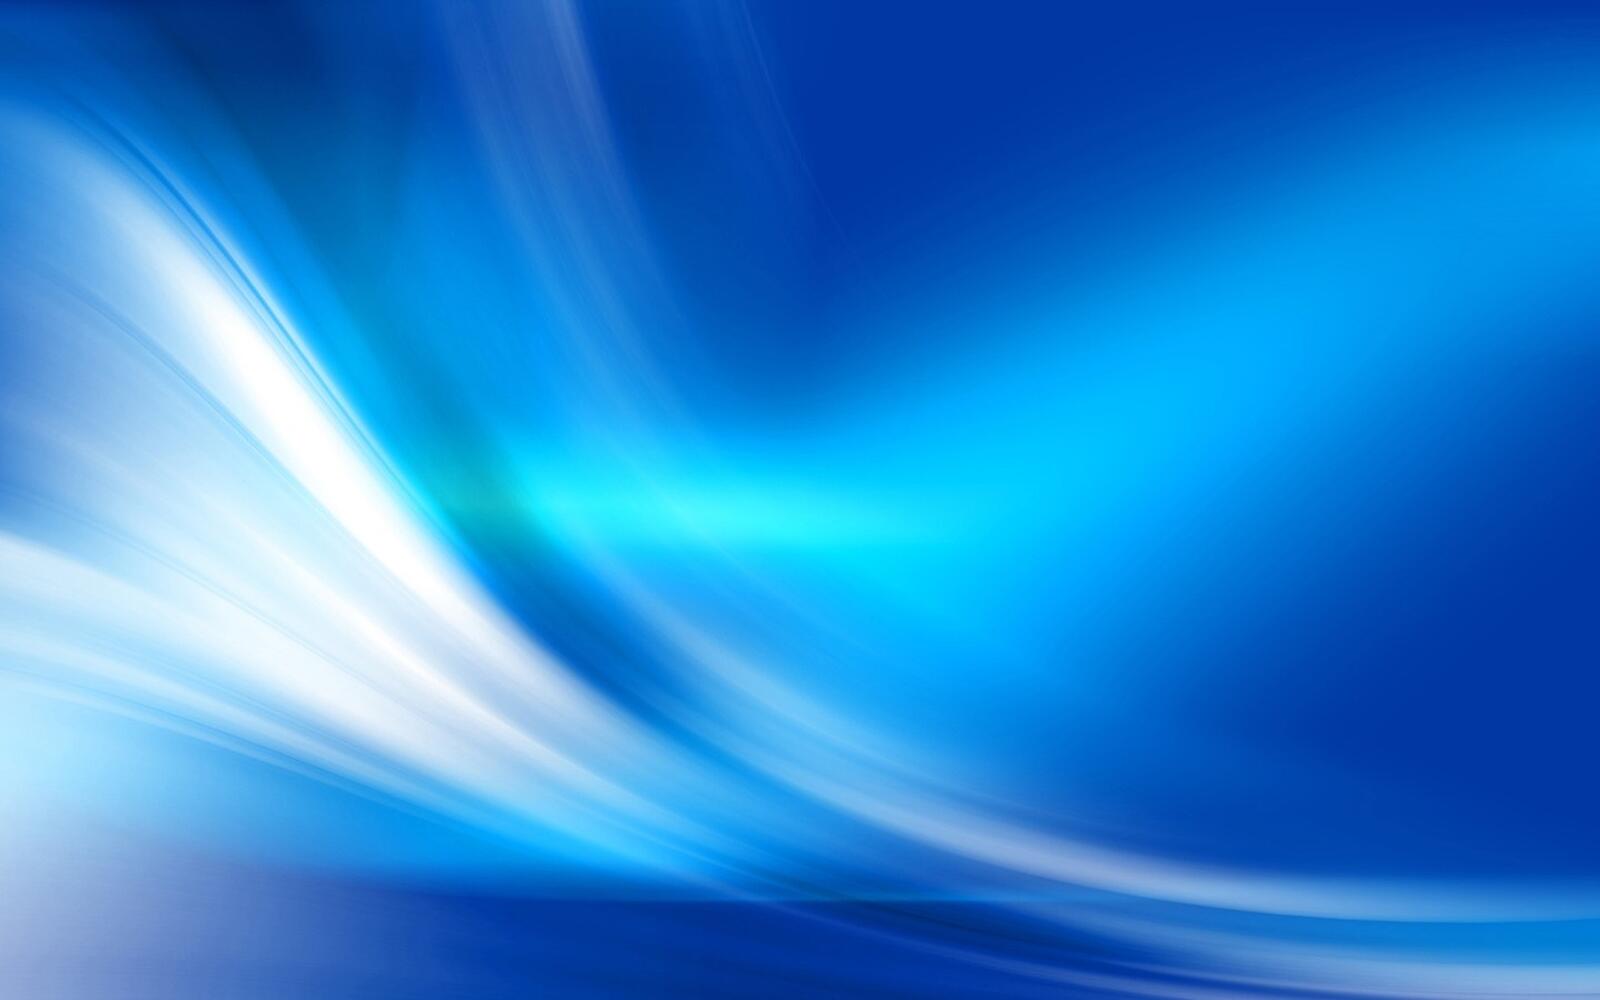 Wallpapers background waves blue on the desktop